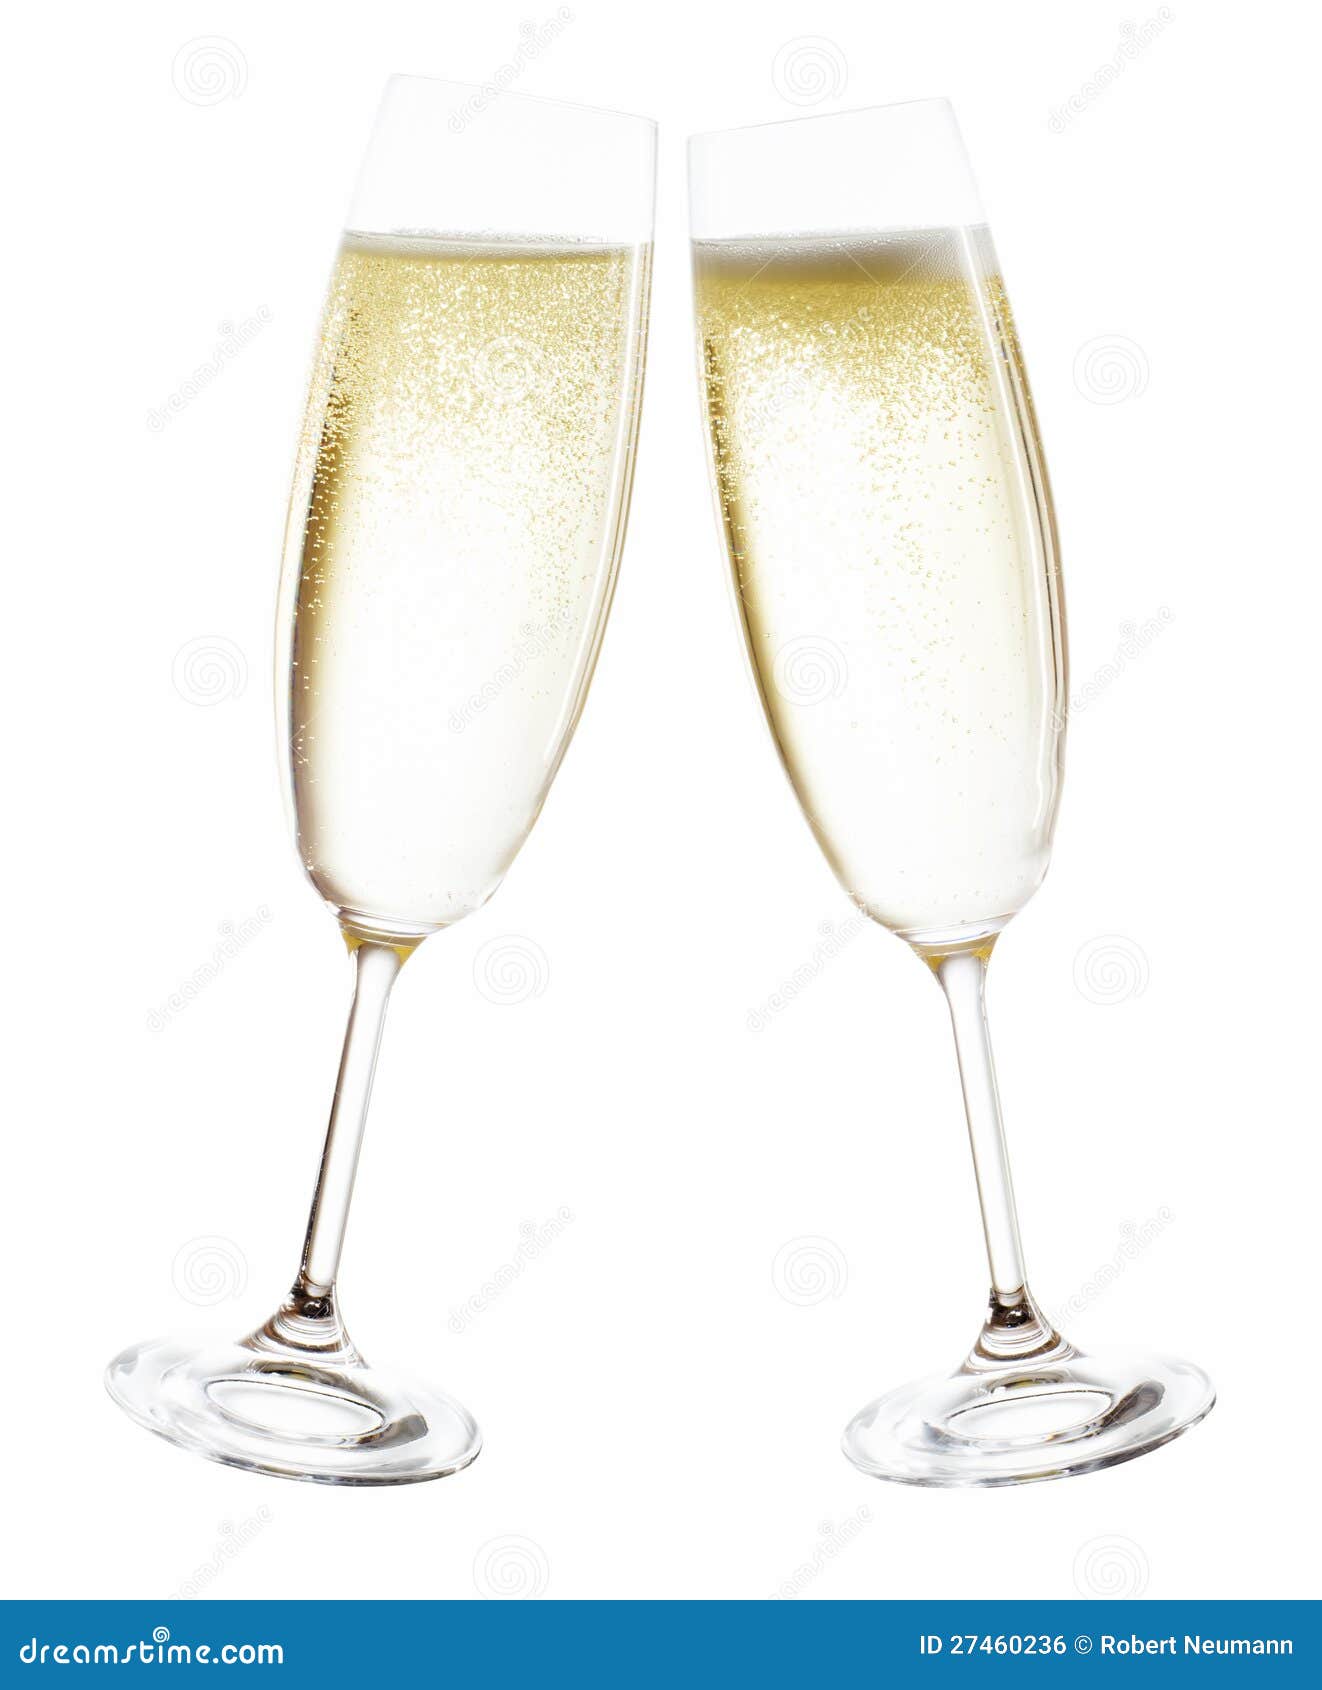 45+ Gold Champagne Glasses Cartoon Pics